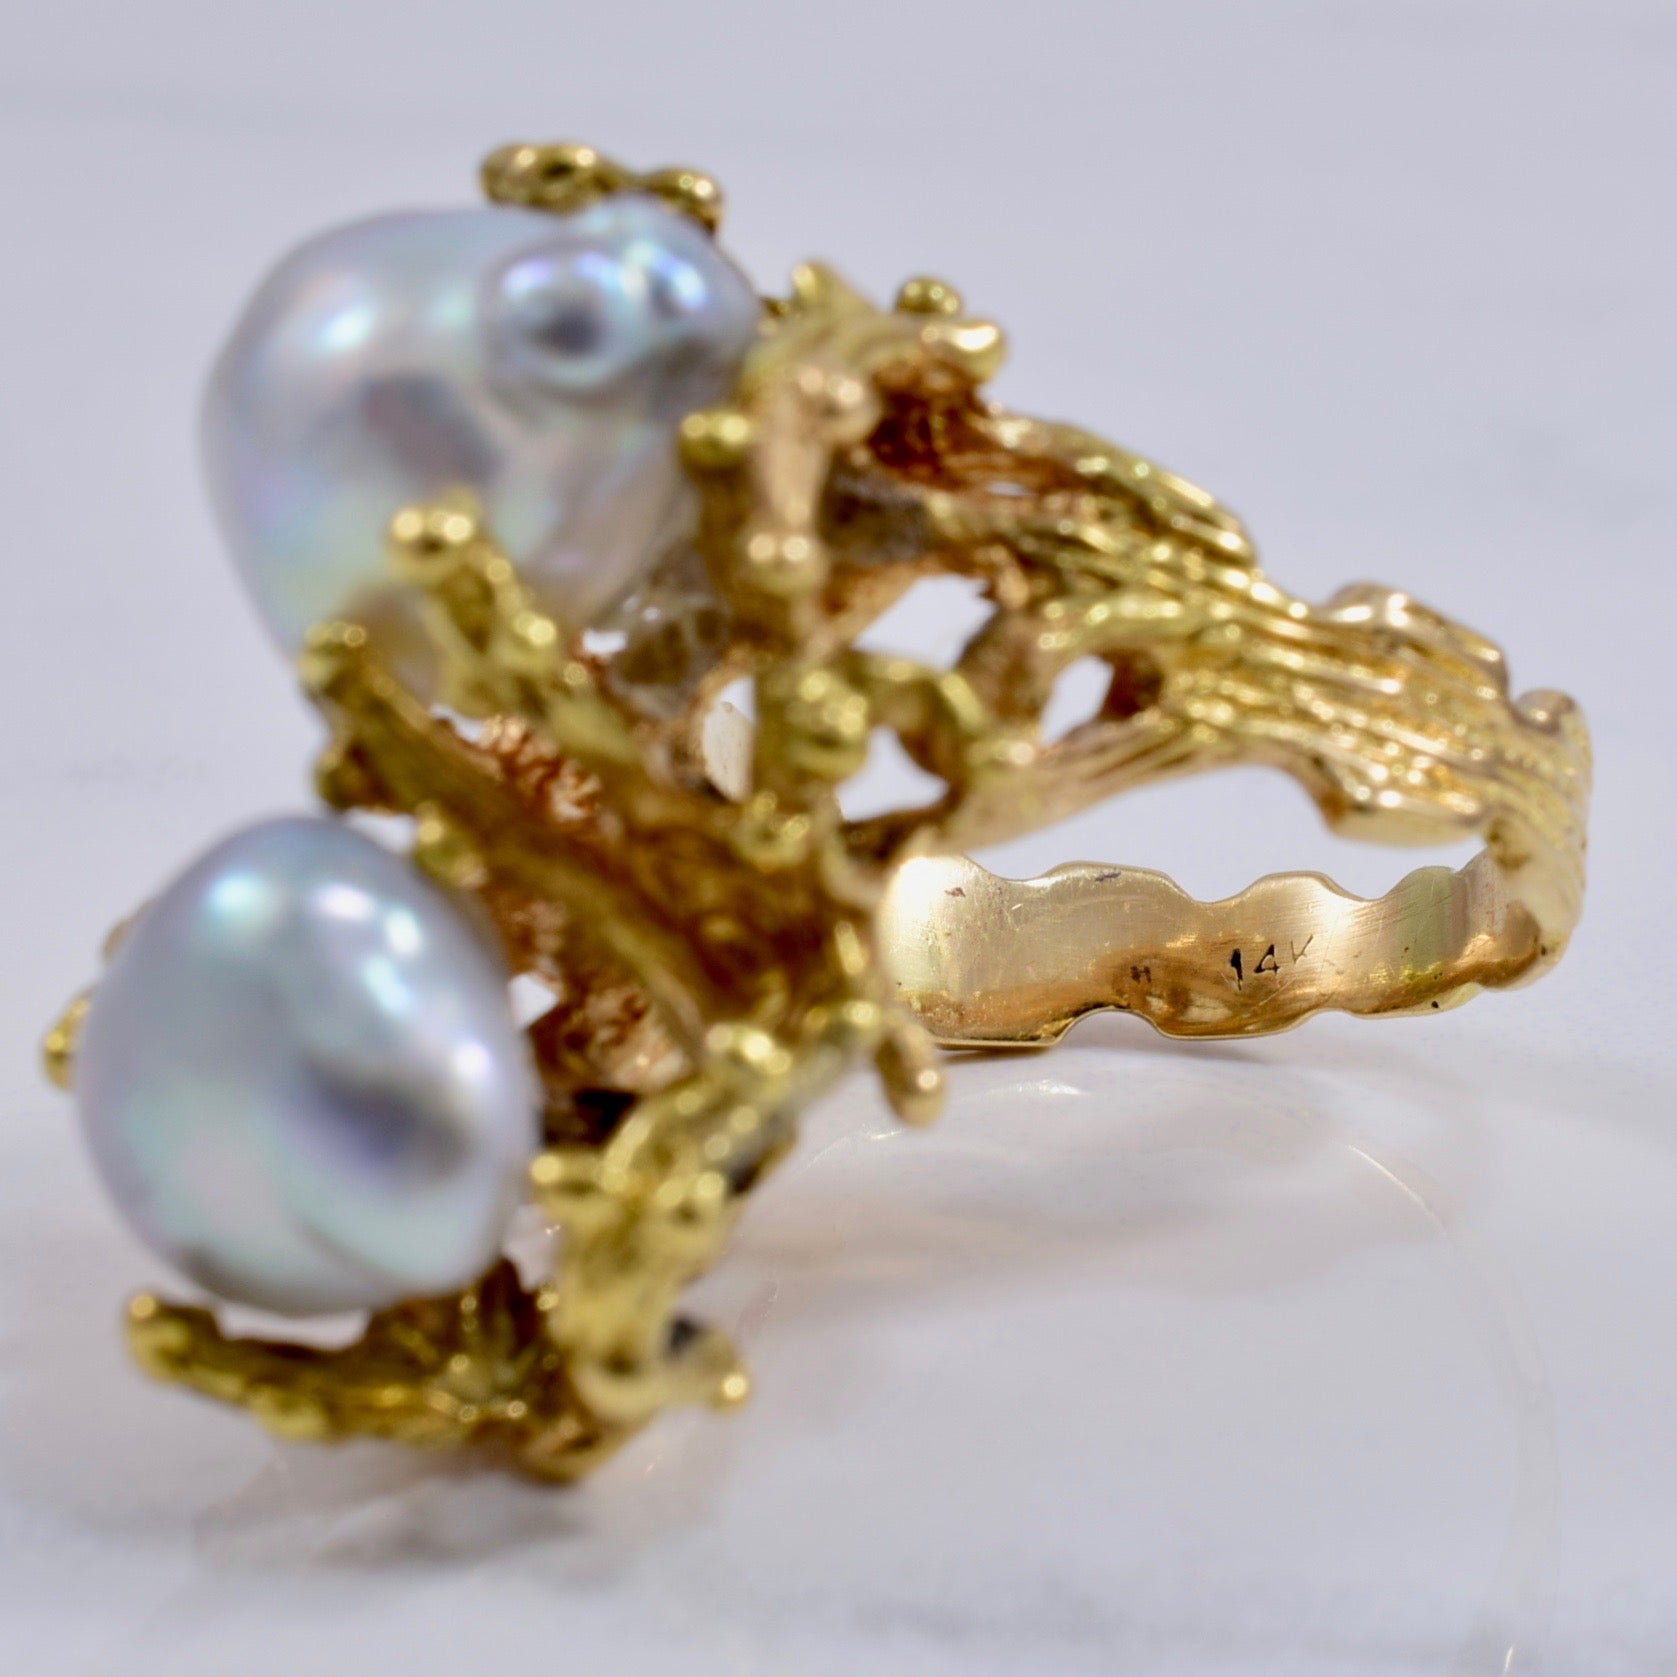 Baroque Pearl Ring | 8.7 ctw SZ 5 |